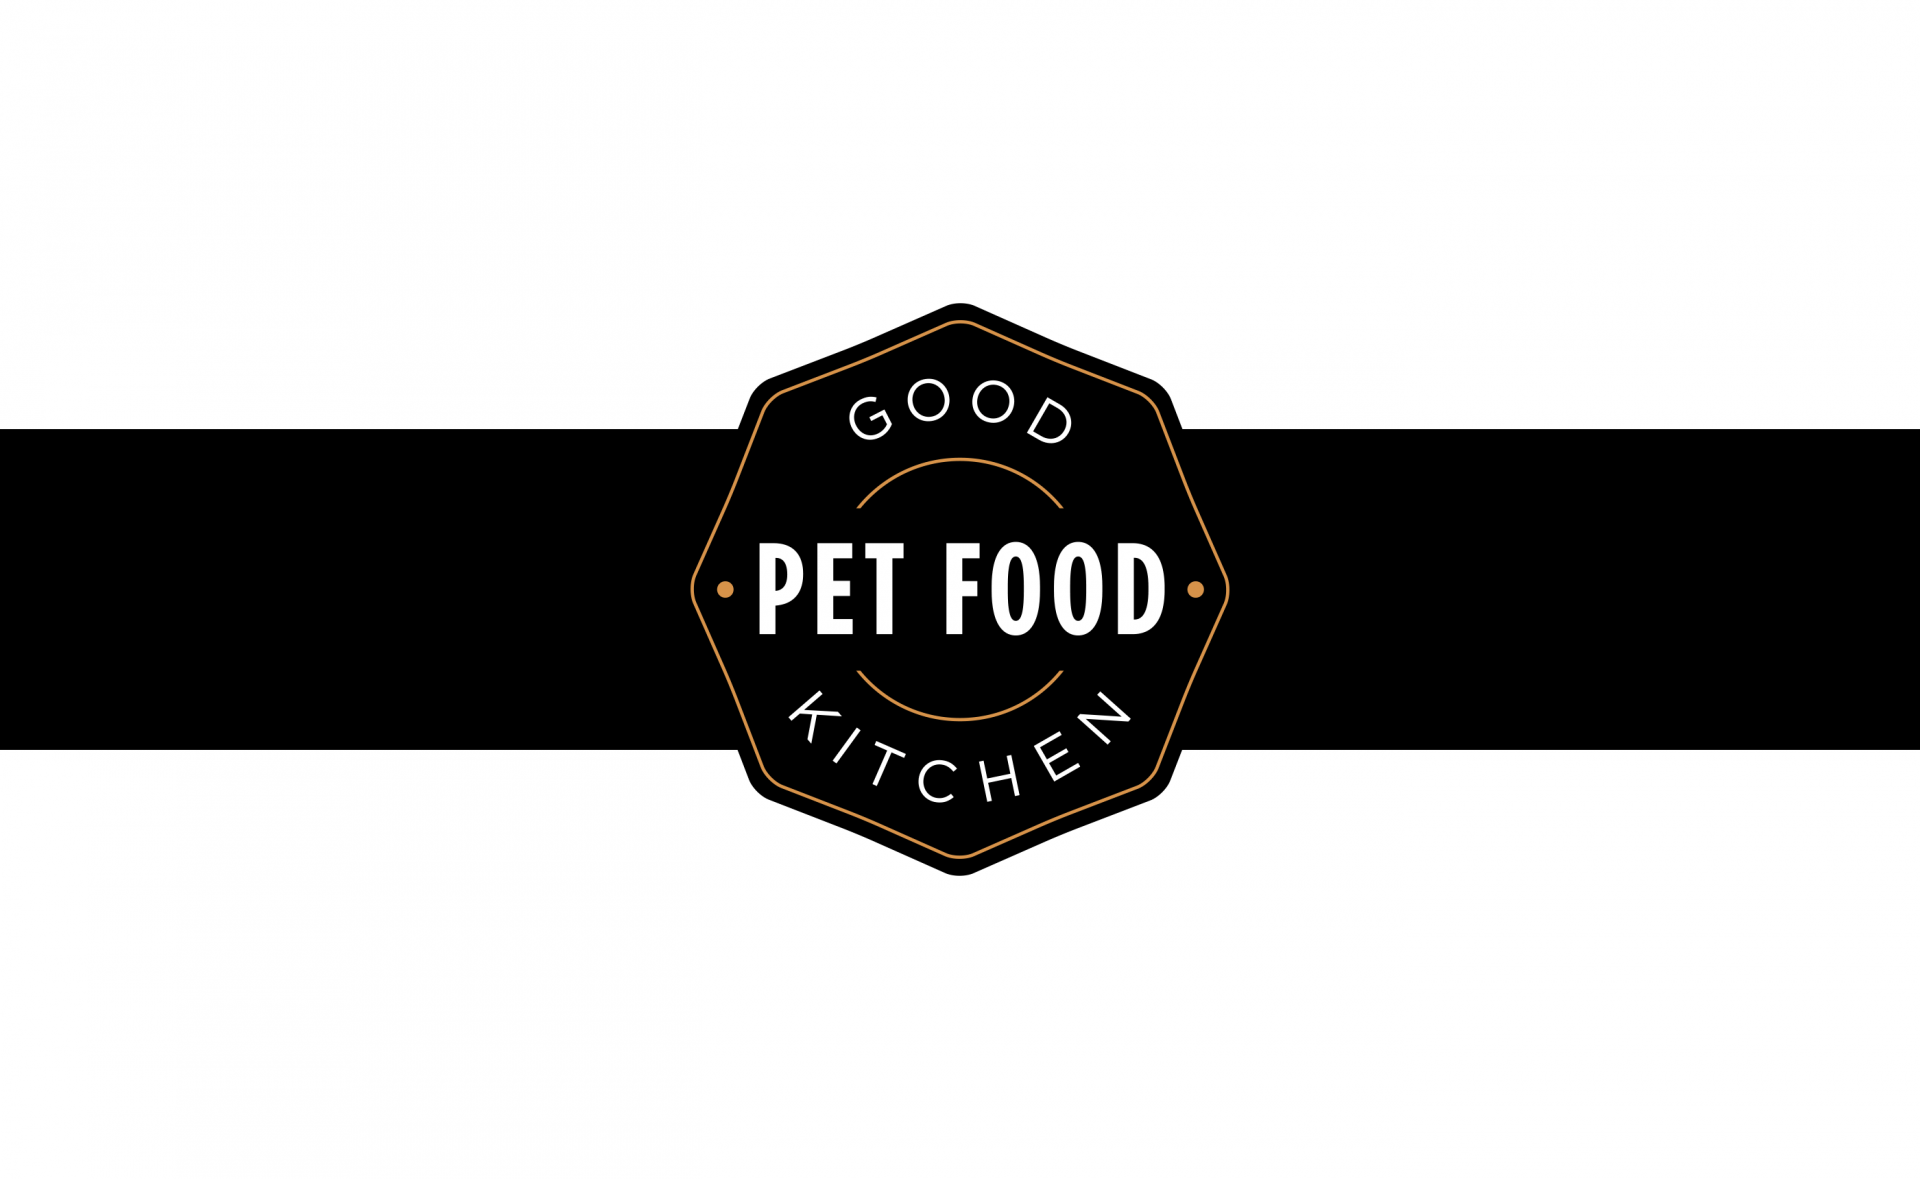 Good Pet Food Kitchen